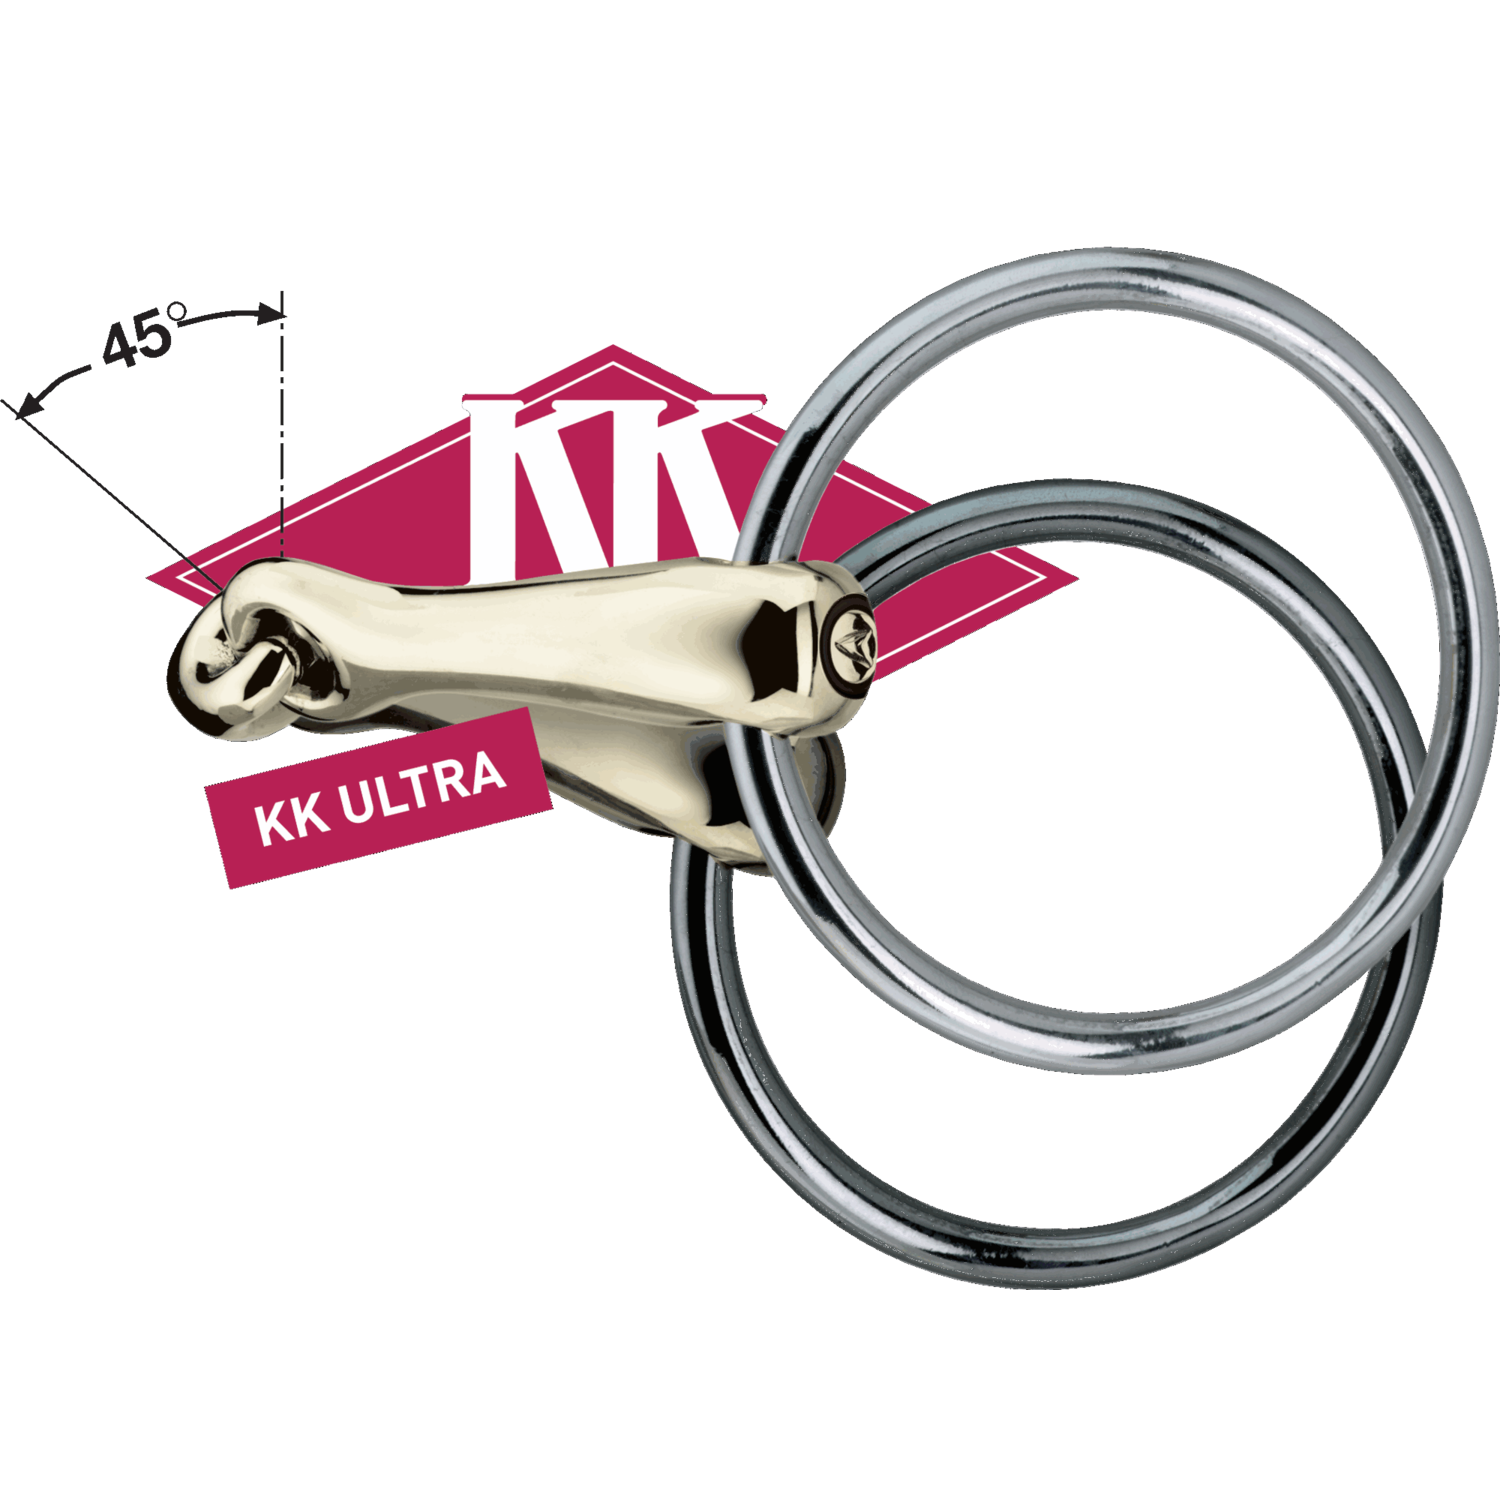 KK ULTRA Fillistrense 16 mm | Logo_KK_ULTRA_mit_45_Grad_Winkel_Sensogan.png | 1700896672